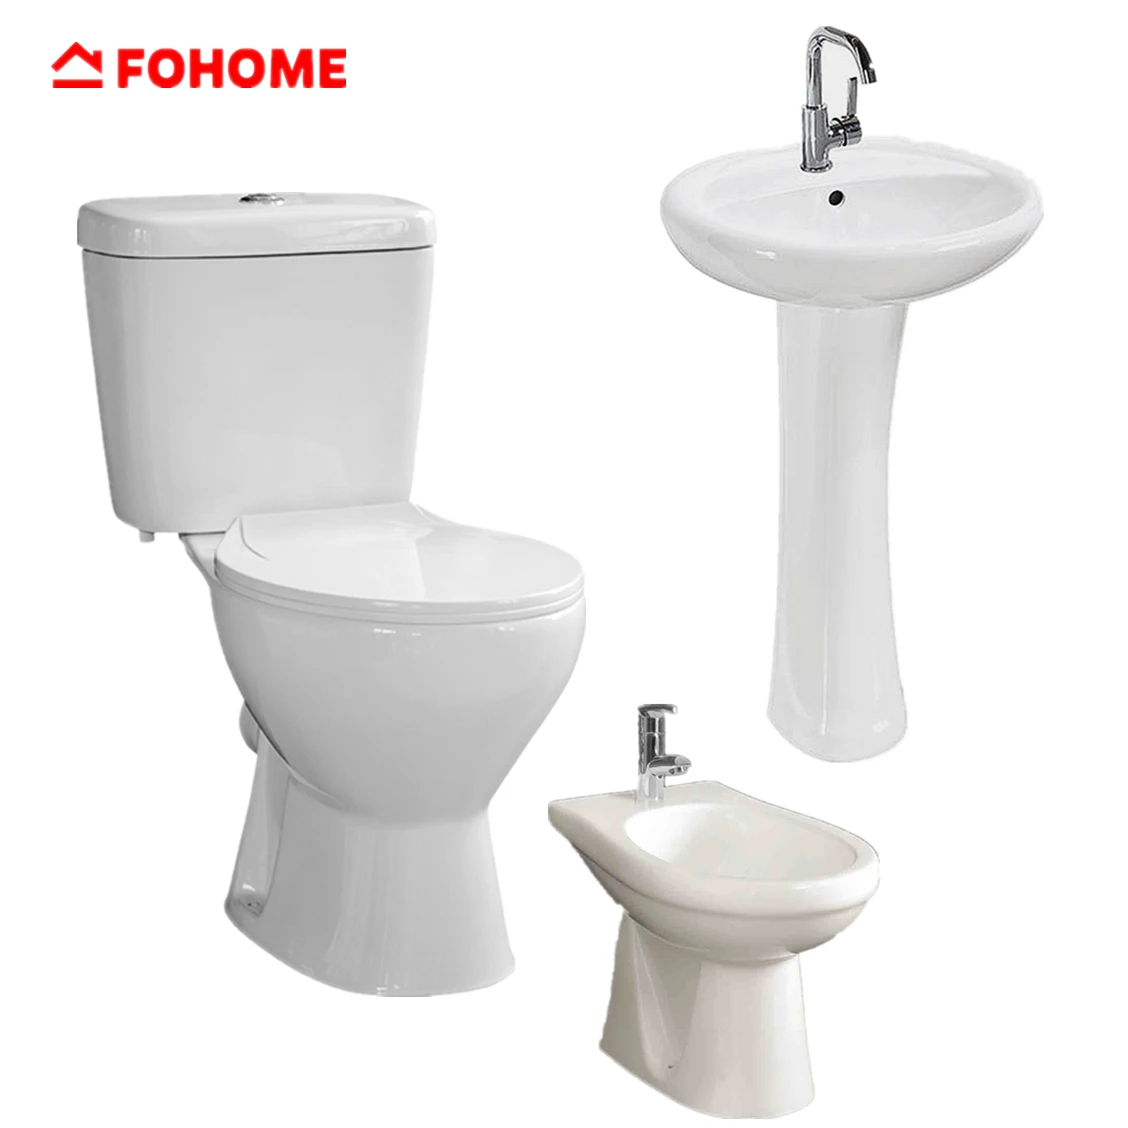 Complete oval shape sets washdown two piece toilet with pedestal basin toilet bidet set